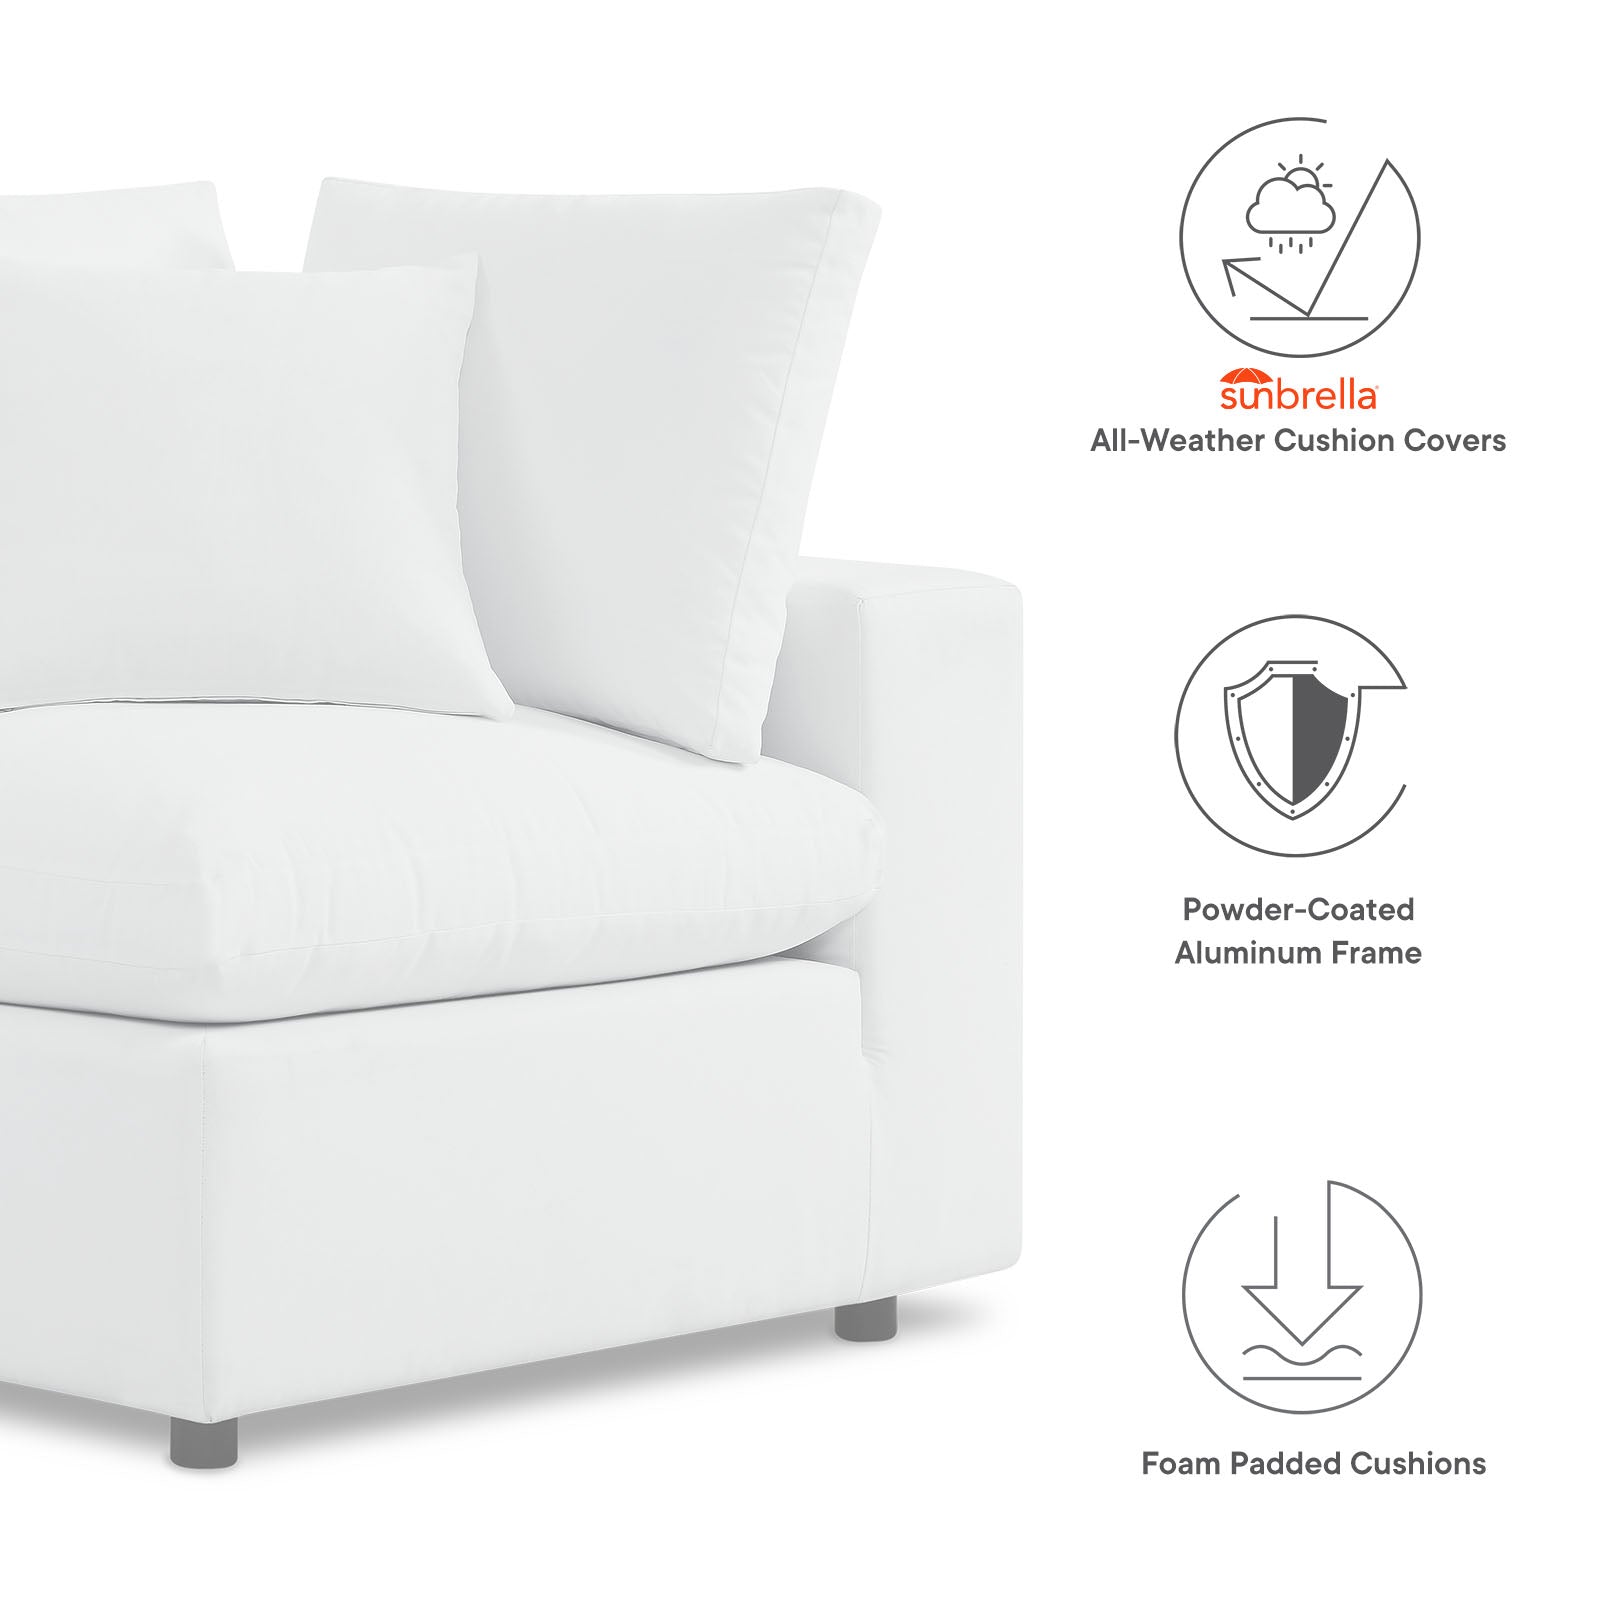 Modway Outdoor Sofas - Commix 6-Piece Sunbrella Outdoor Patio Sectional Sofa White